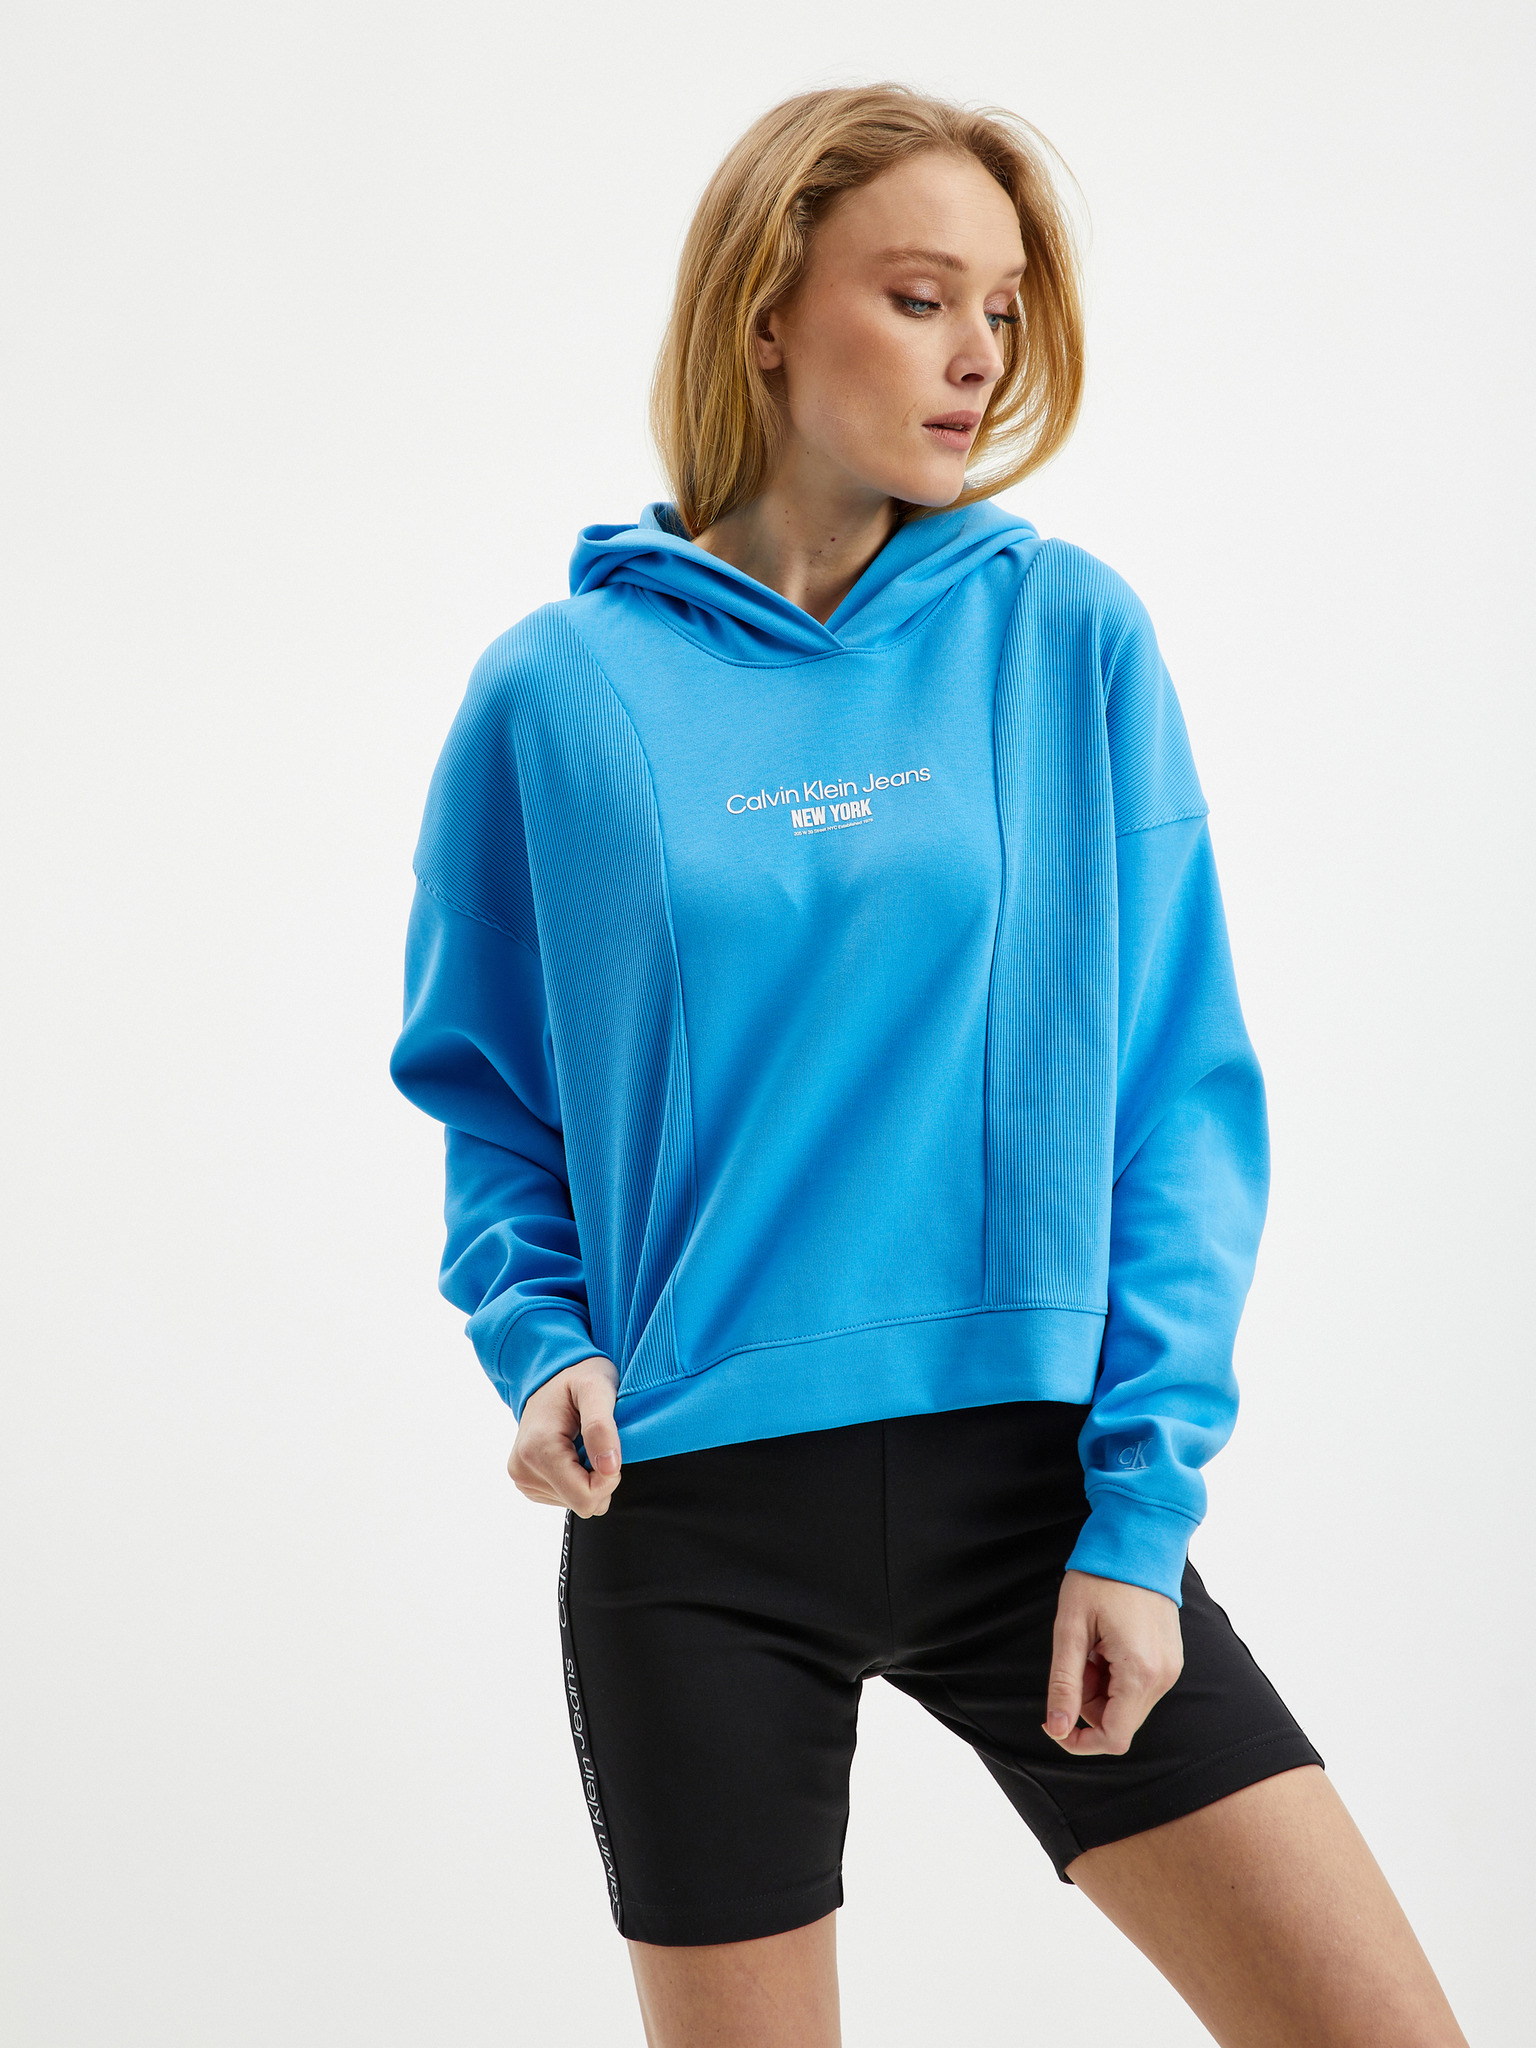 Calvin Klein Jeans Sweatshirts & Hoodies for Women - Poshmark